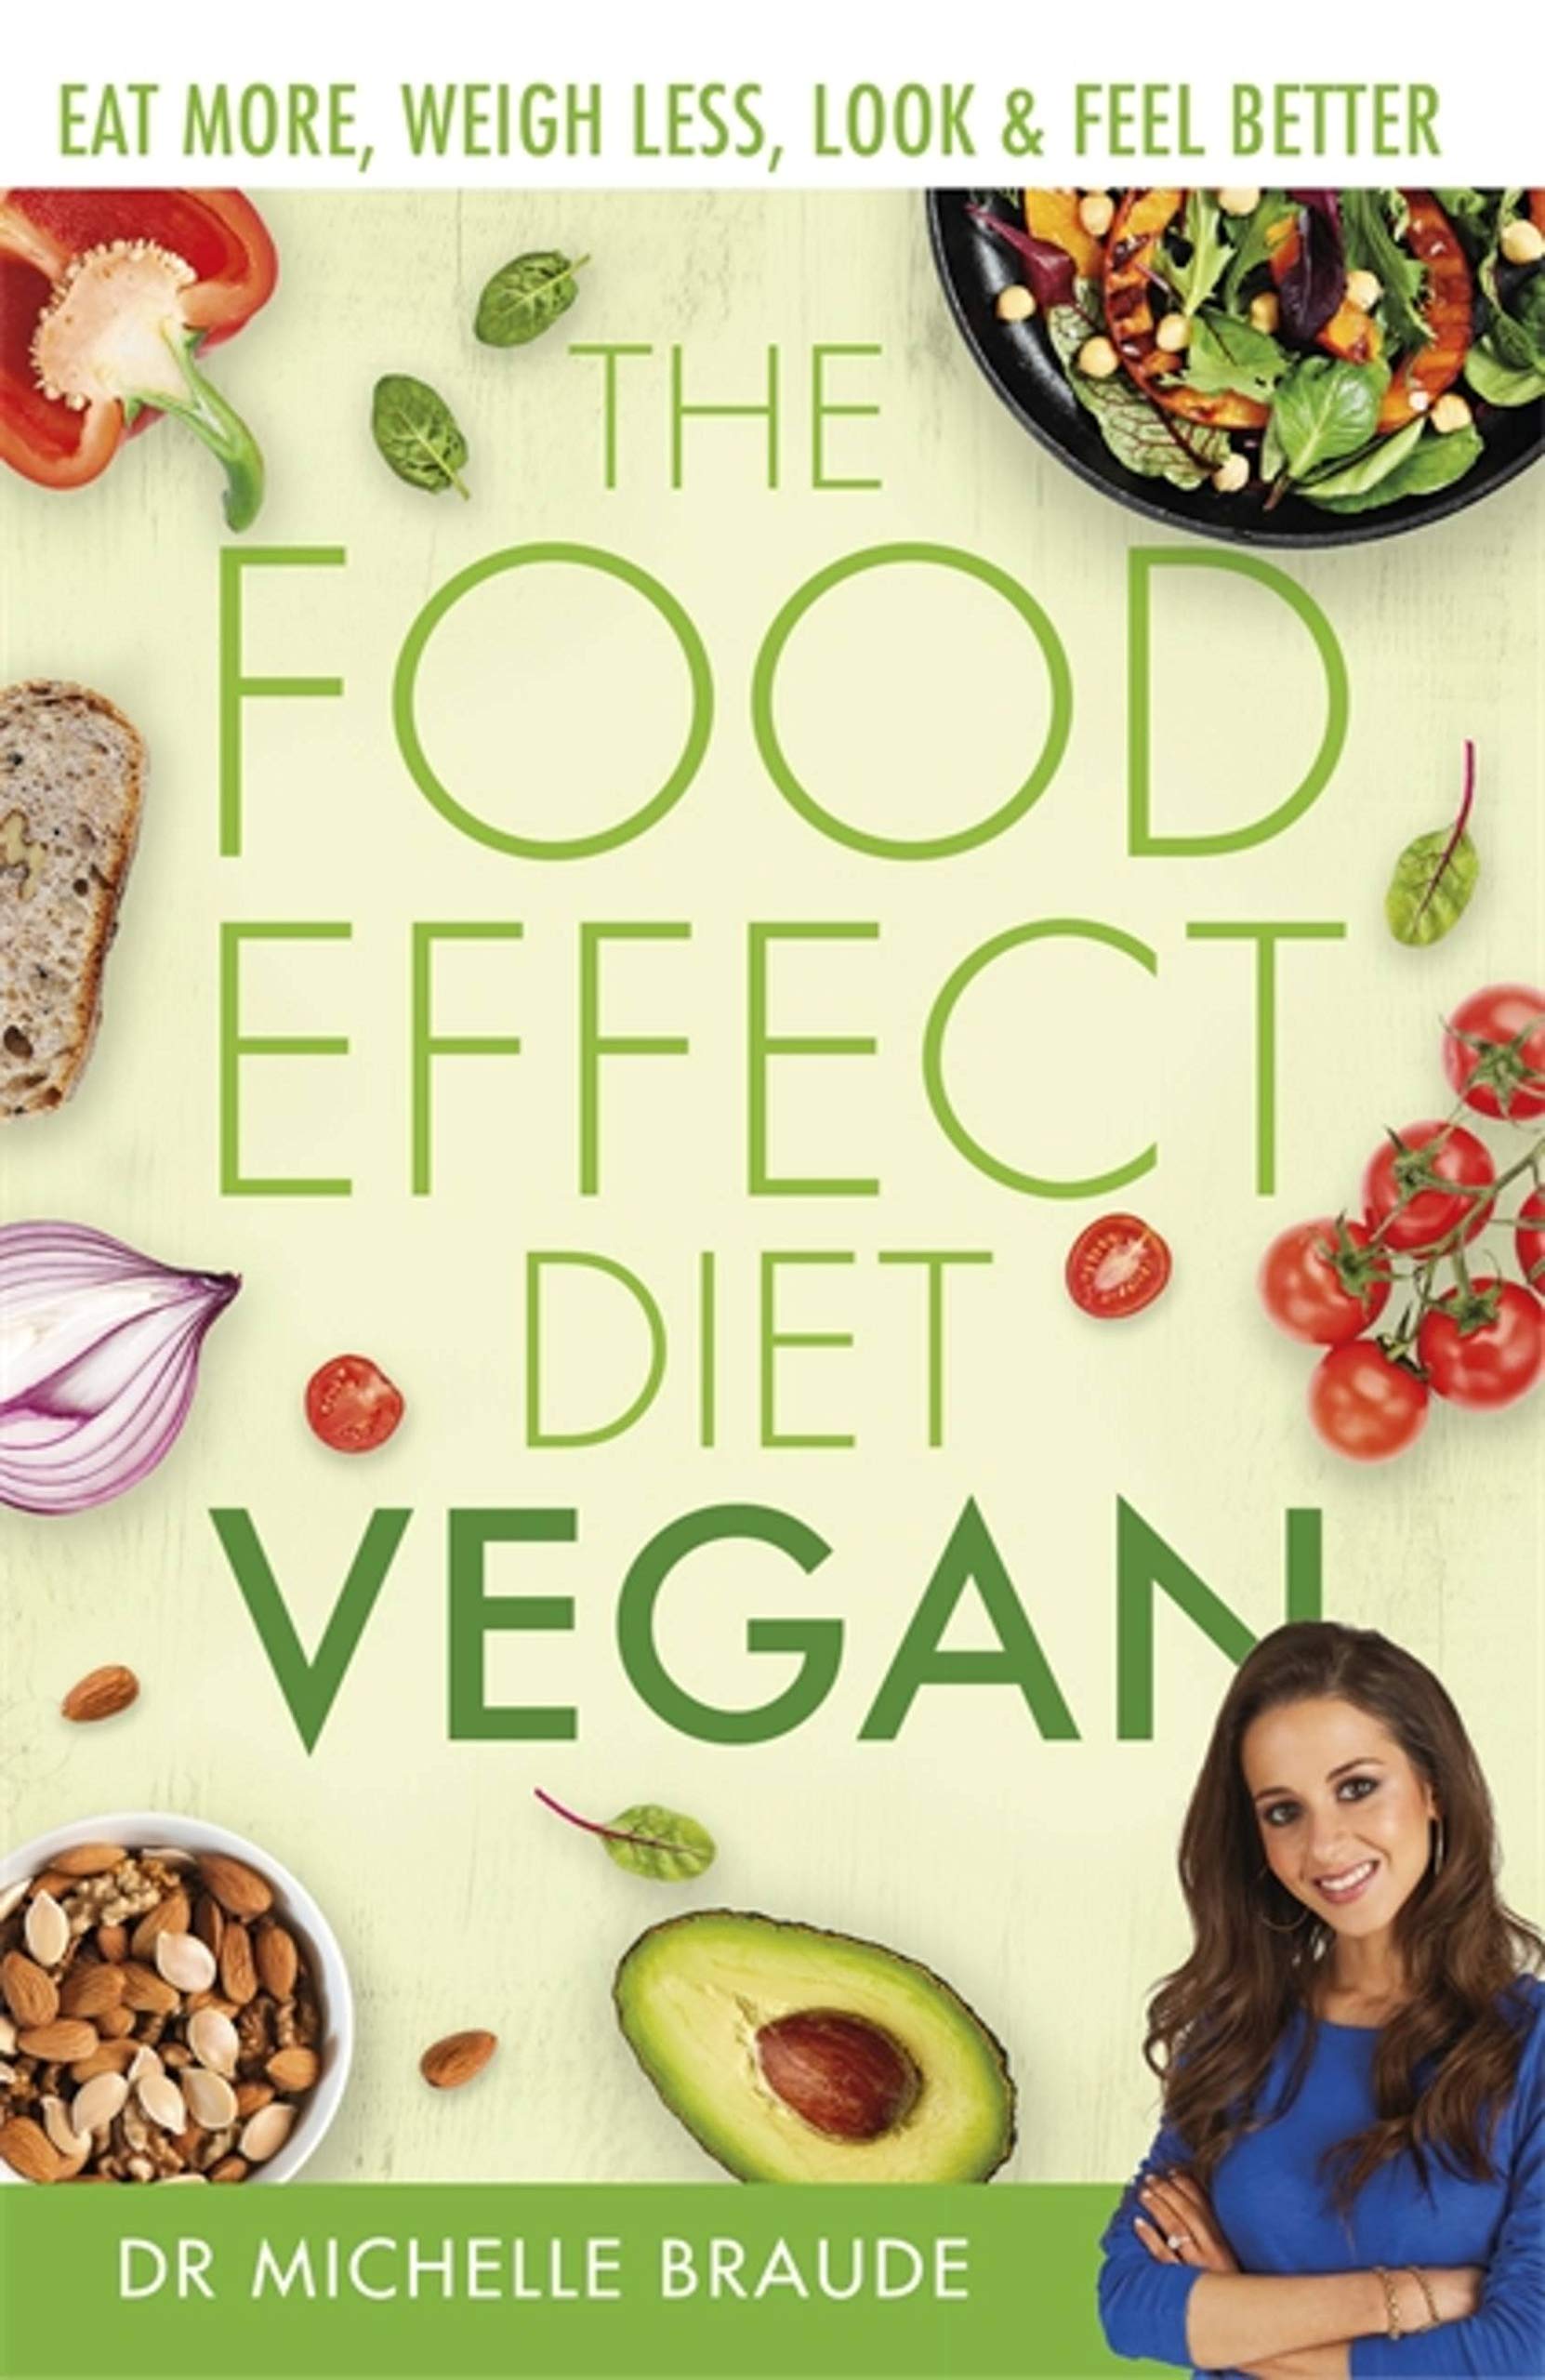 The Food Effect Diet - Vegan : Eat More, Weigh Less, Look & Feel Better [Paperback] หนังสือภาษาอังกฤษพร้อมส่ง